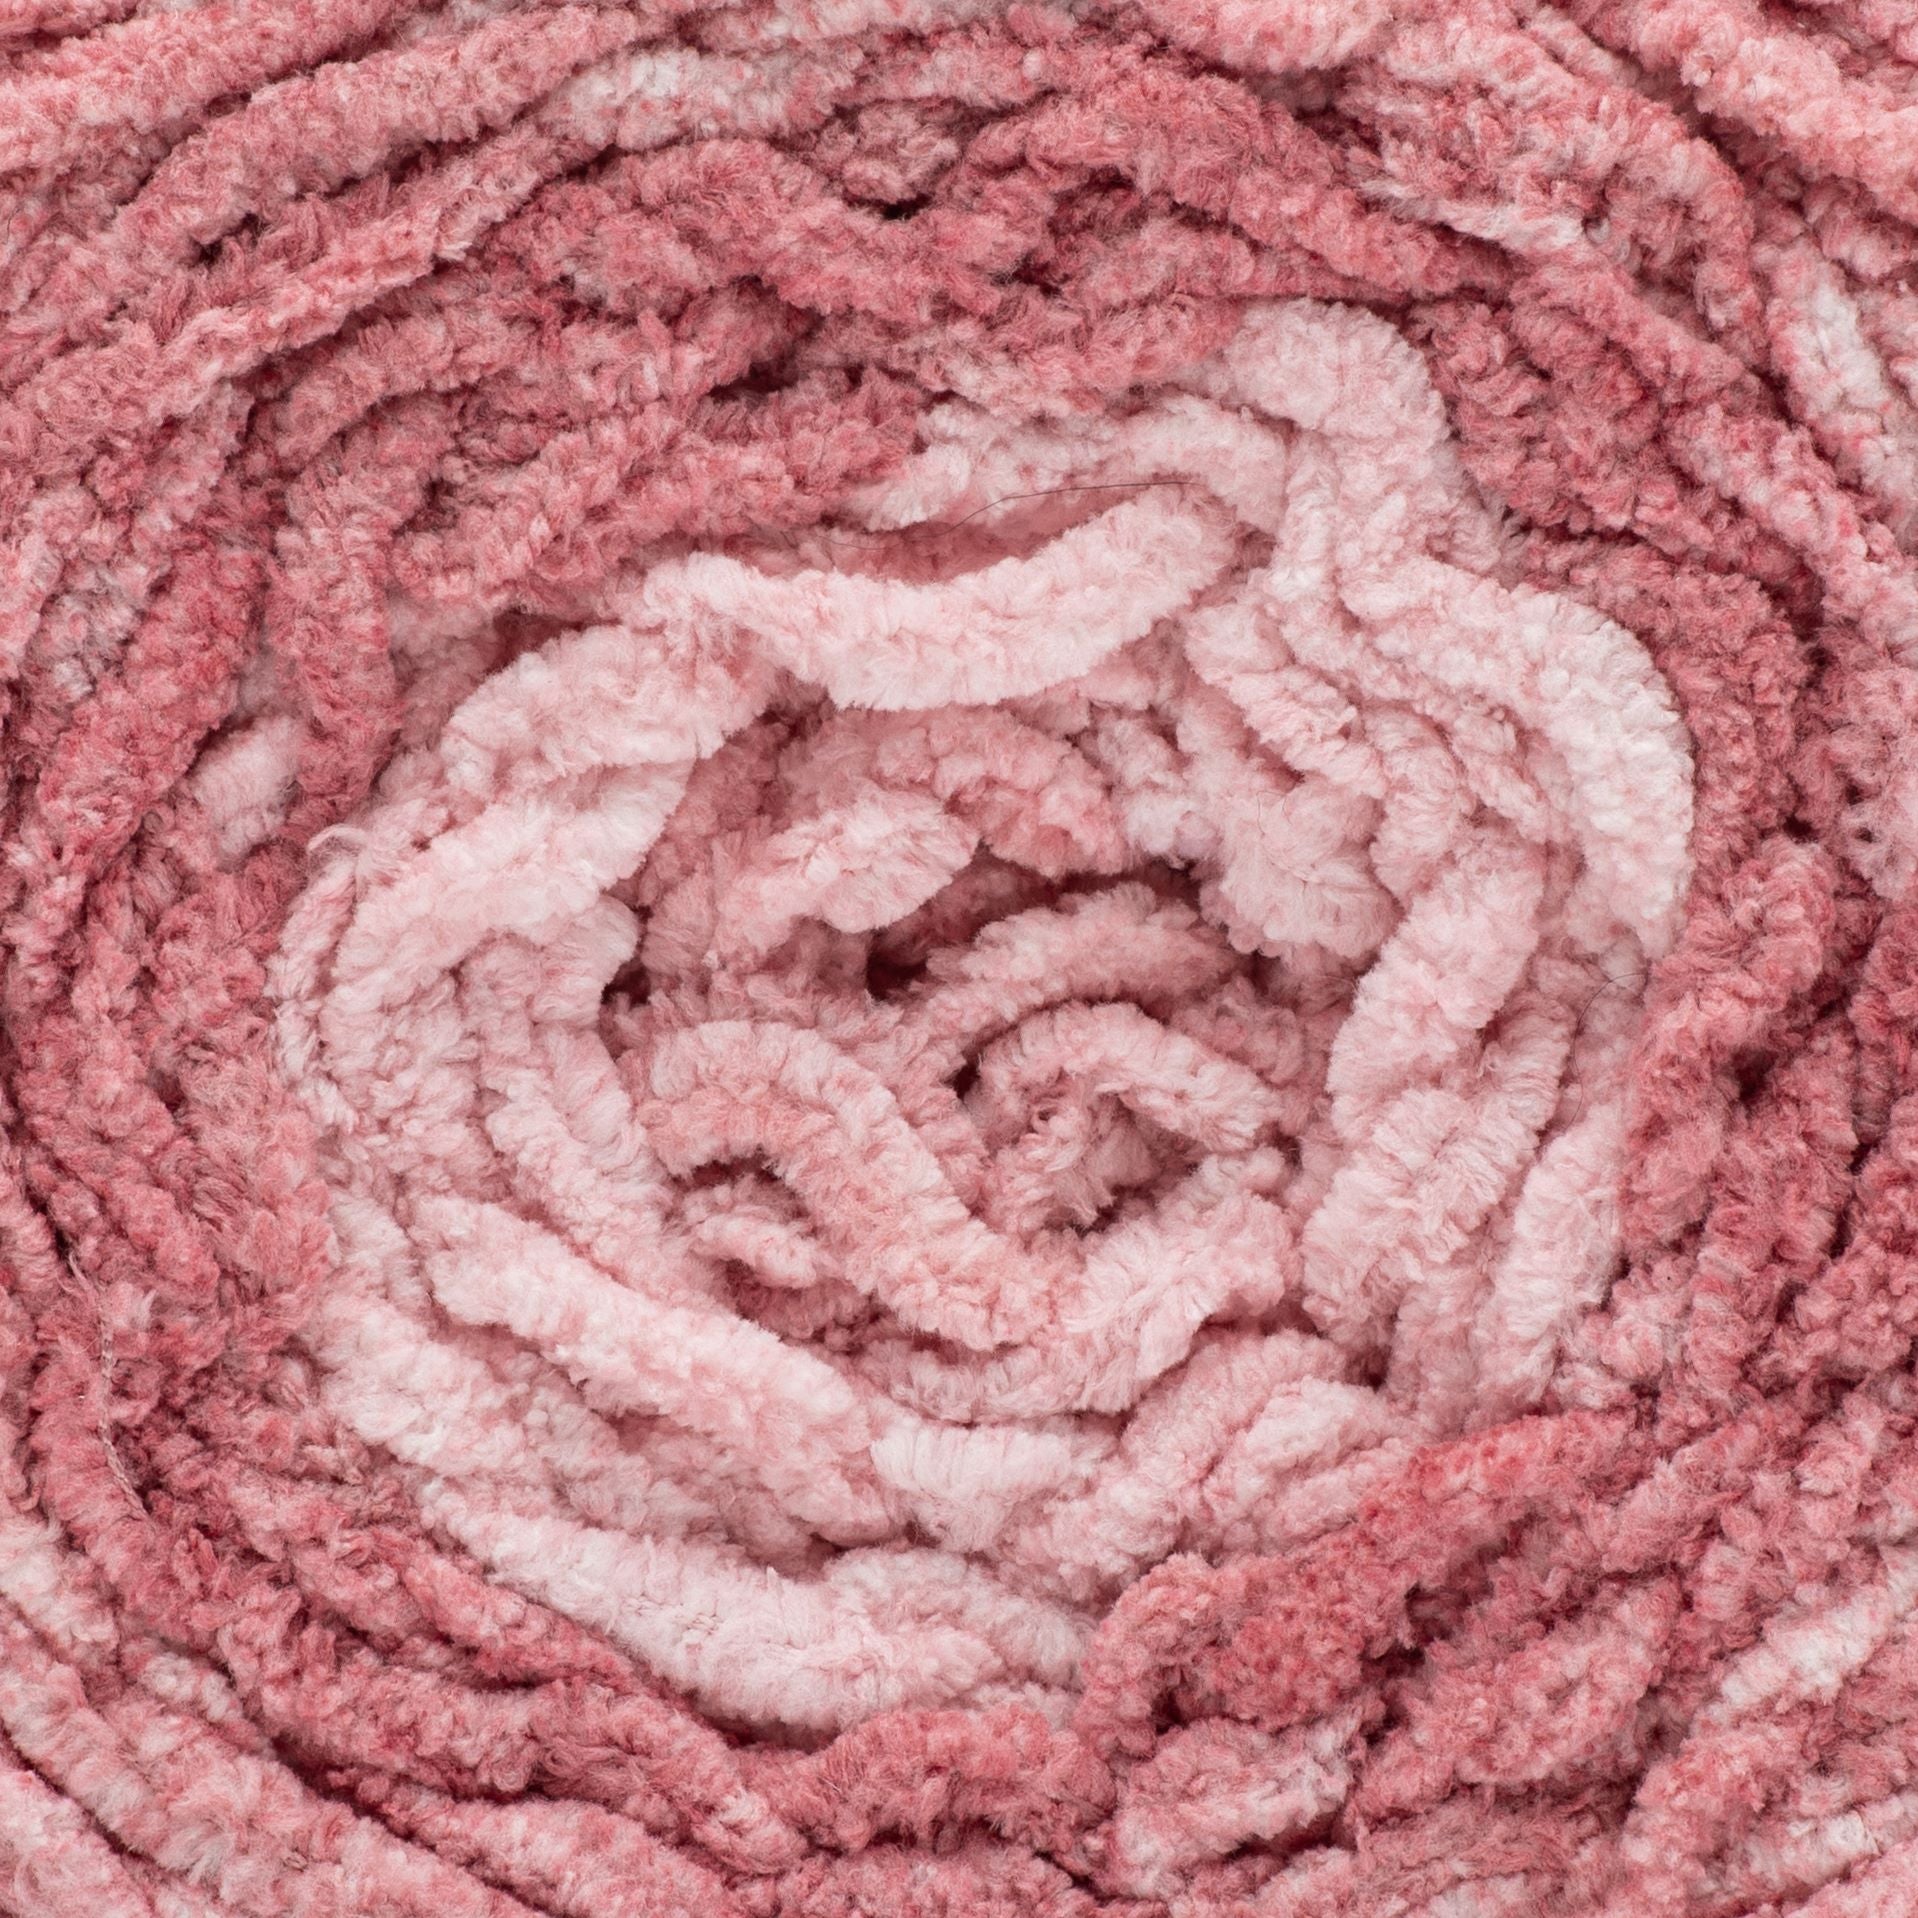 Bernat Baby Blanket Dappled Yarn - Ever After Pink